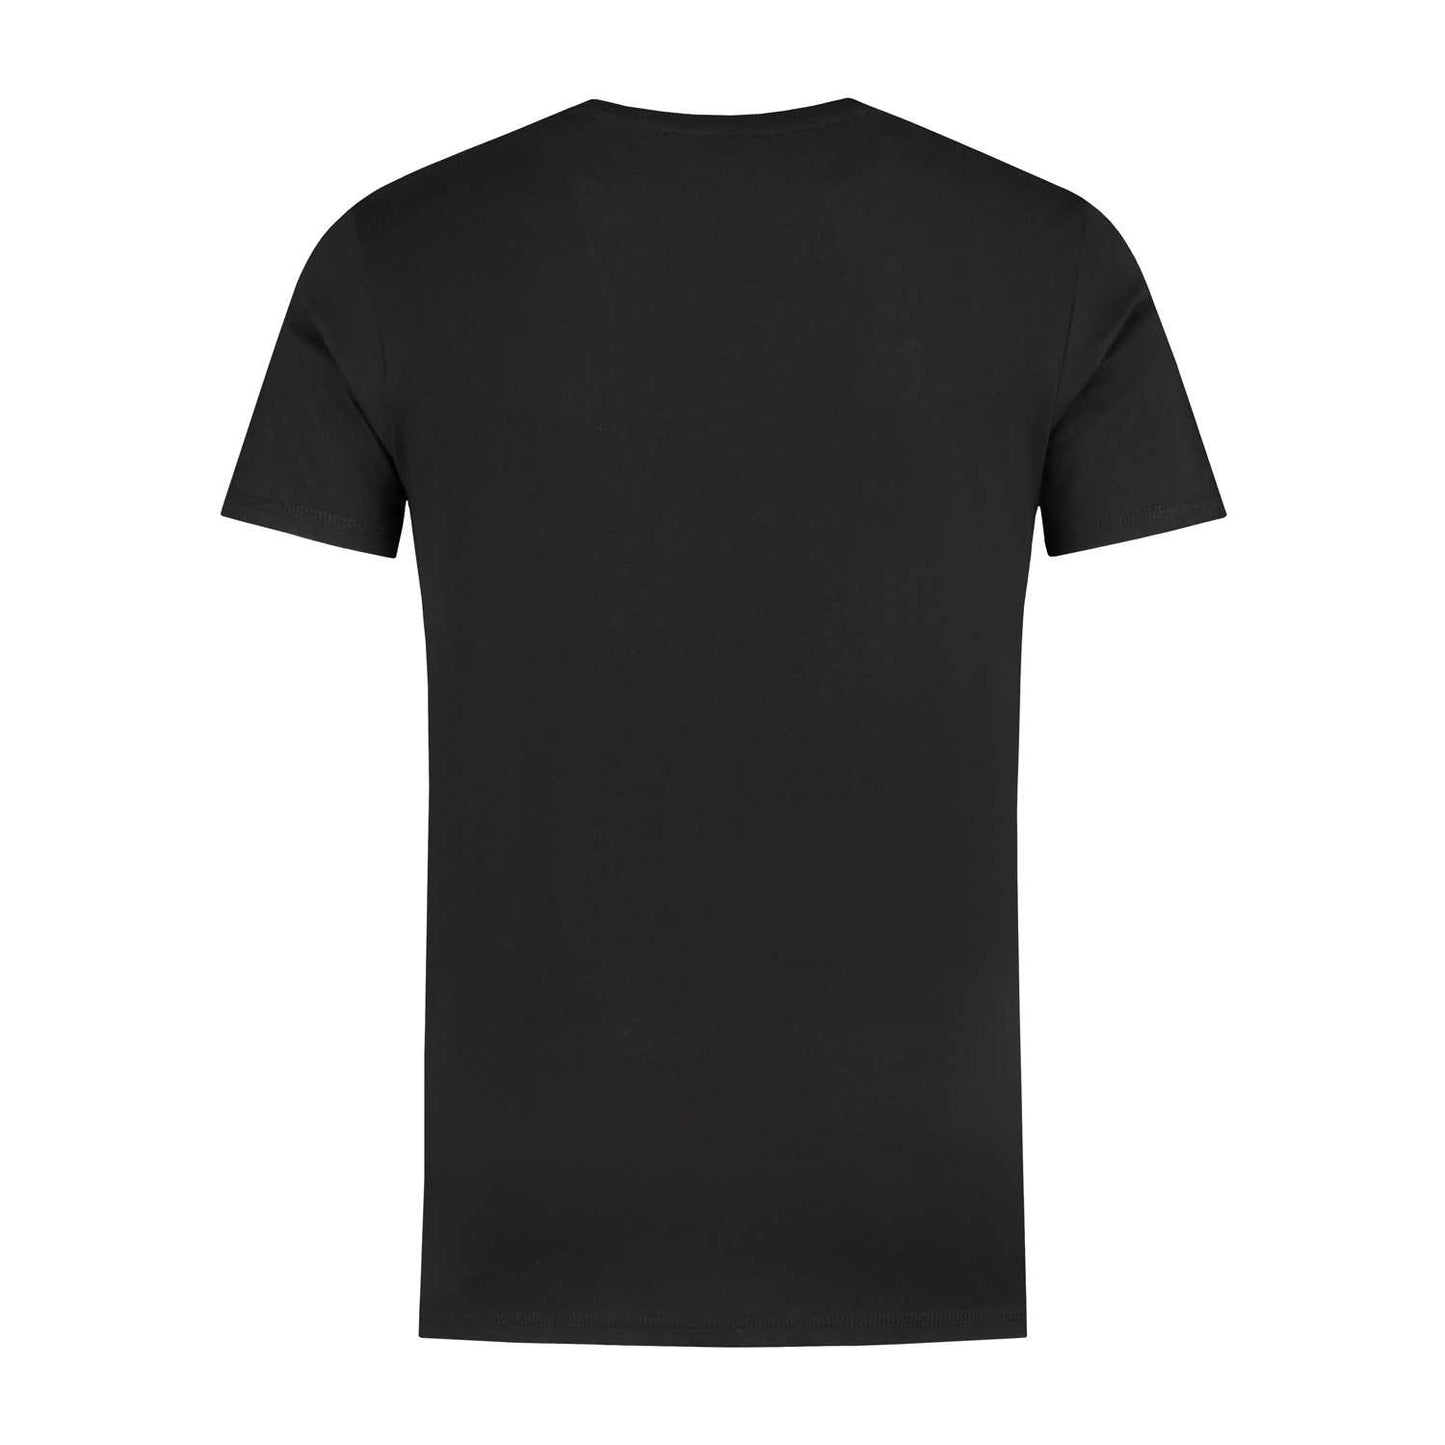 Basic black logo t-shirt (men)